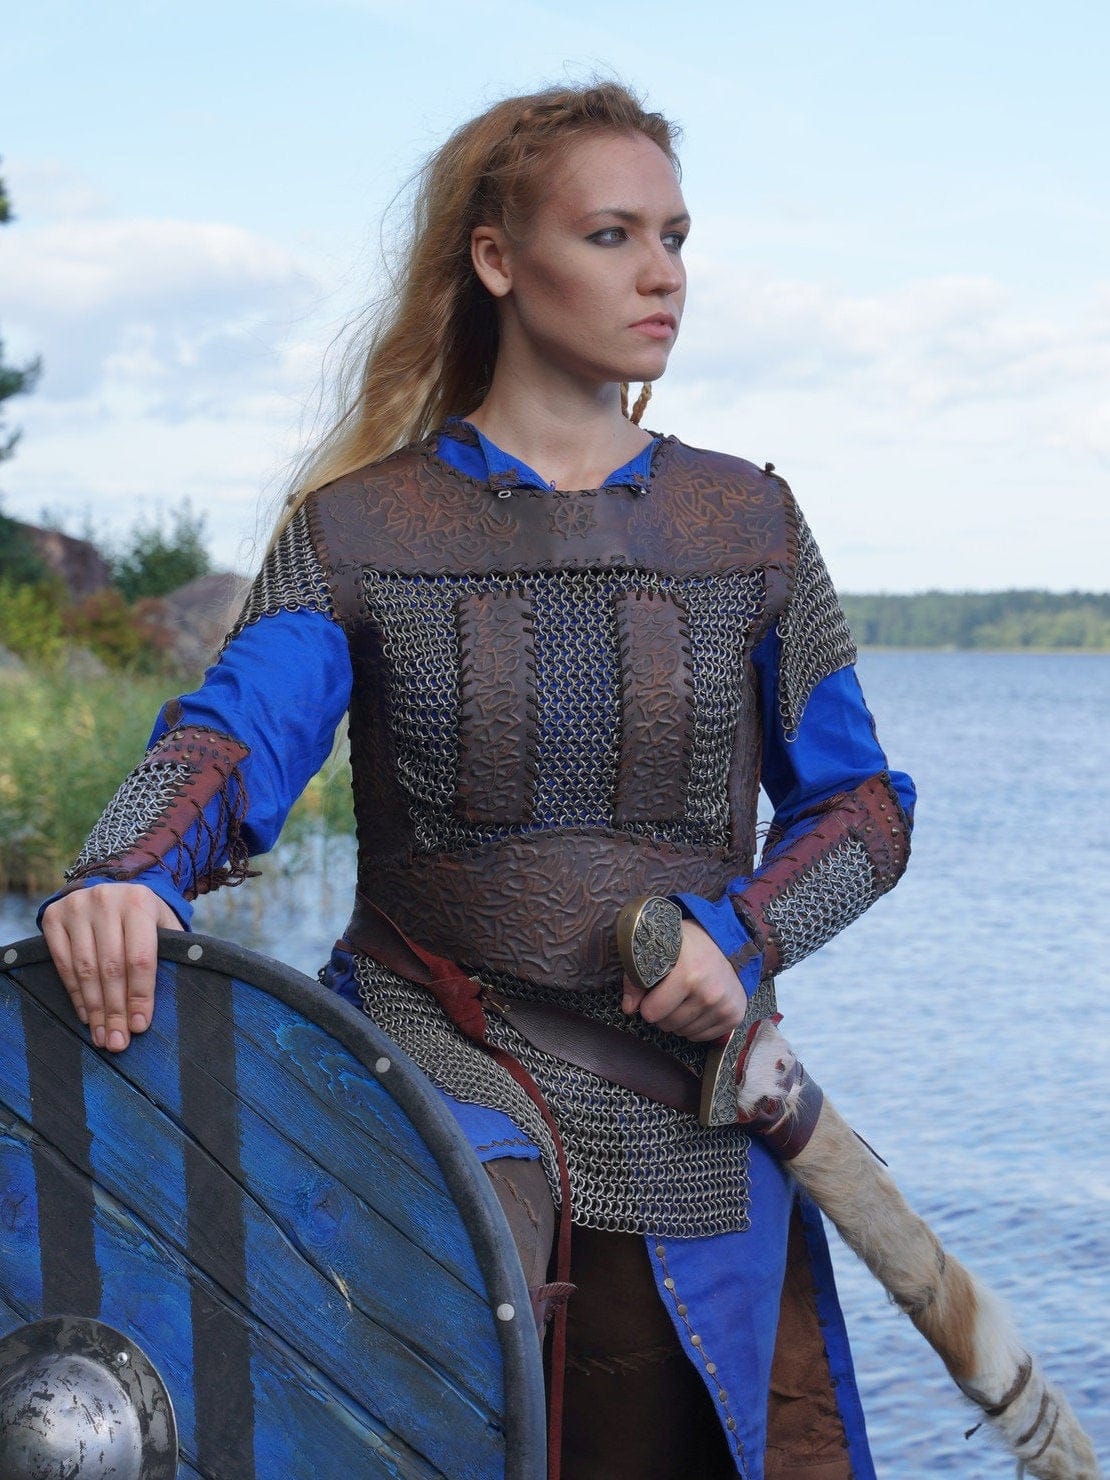 Ivar Boneless armor (Vikings s4) – SokolWorkshop